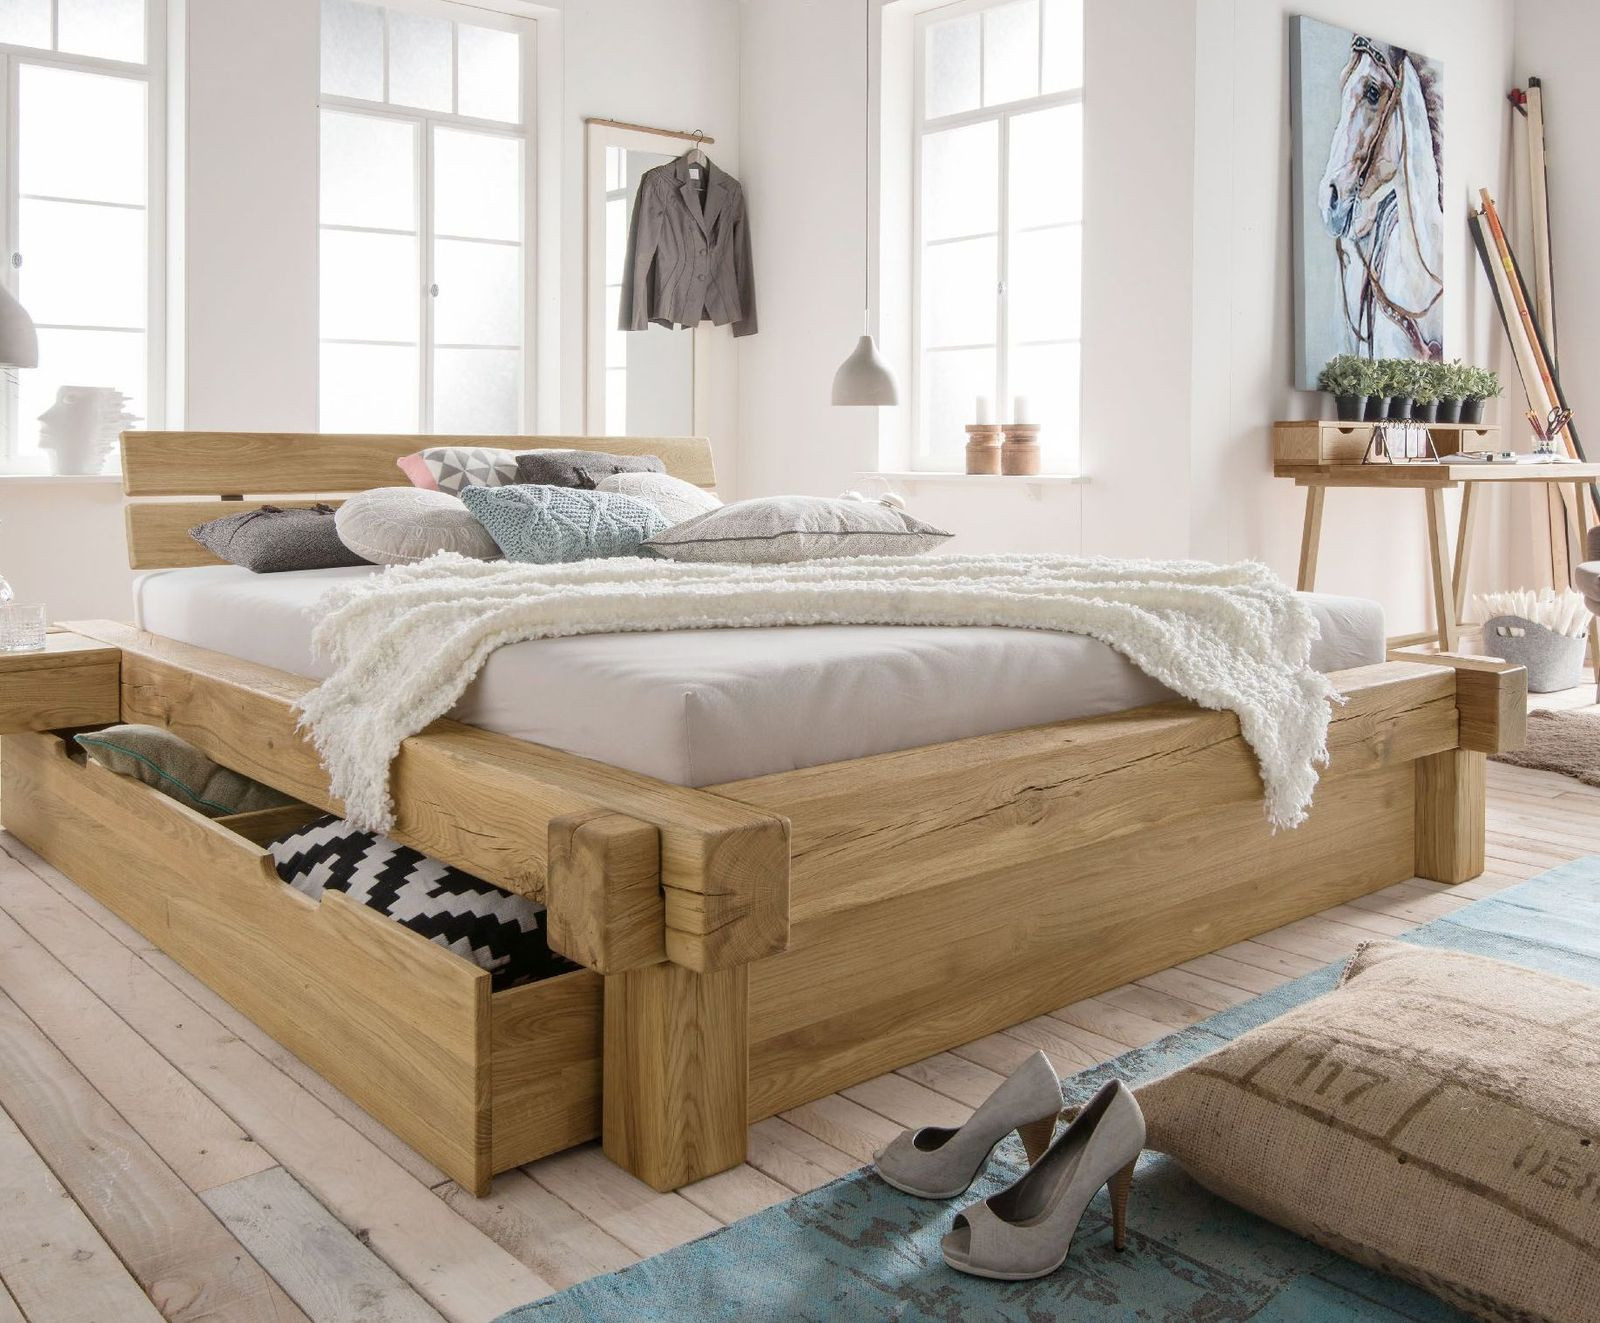 Betten De
 Stabile Betten erkennen und so das Bett selbst stabilisieren